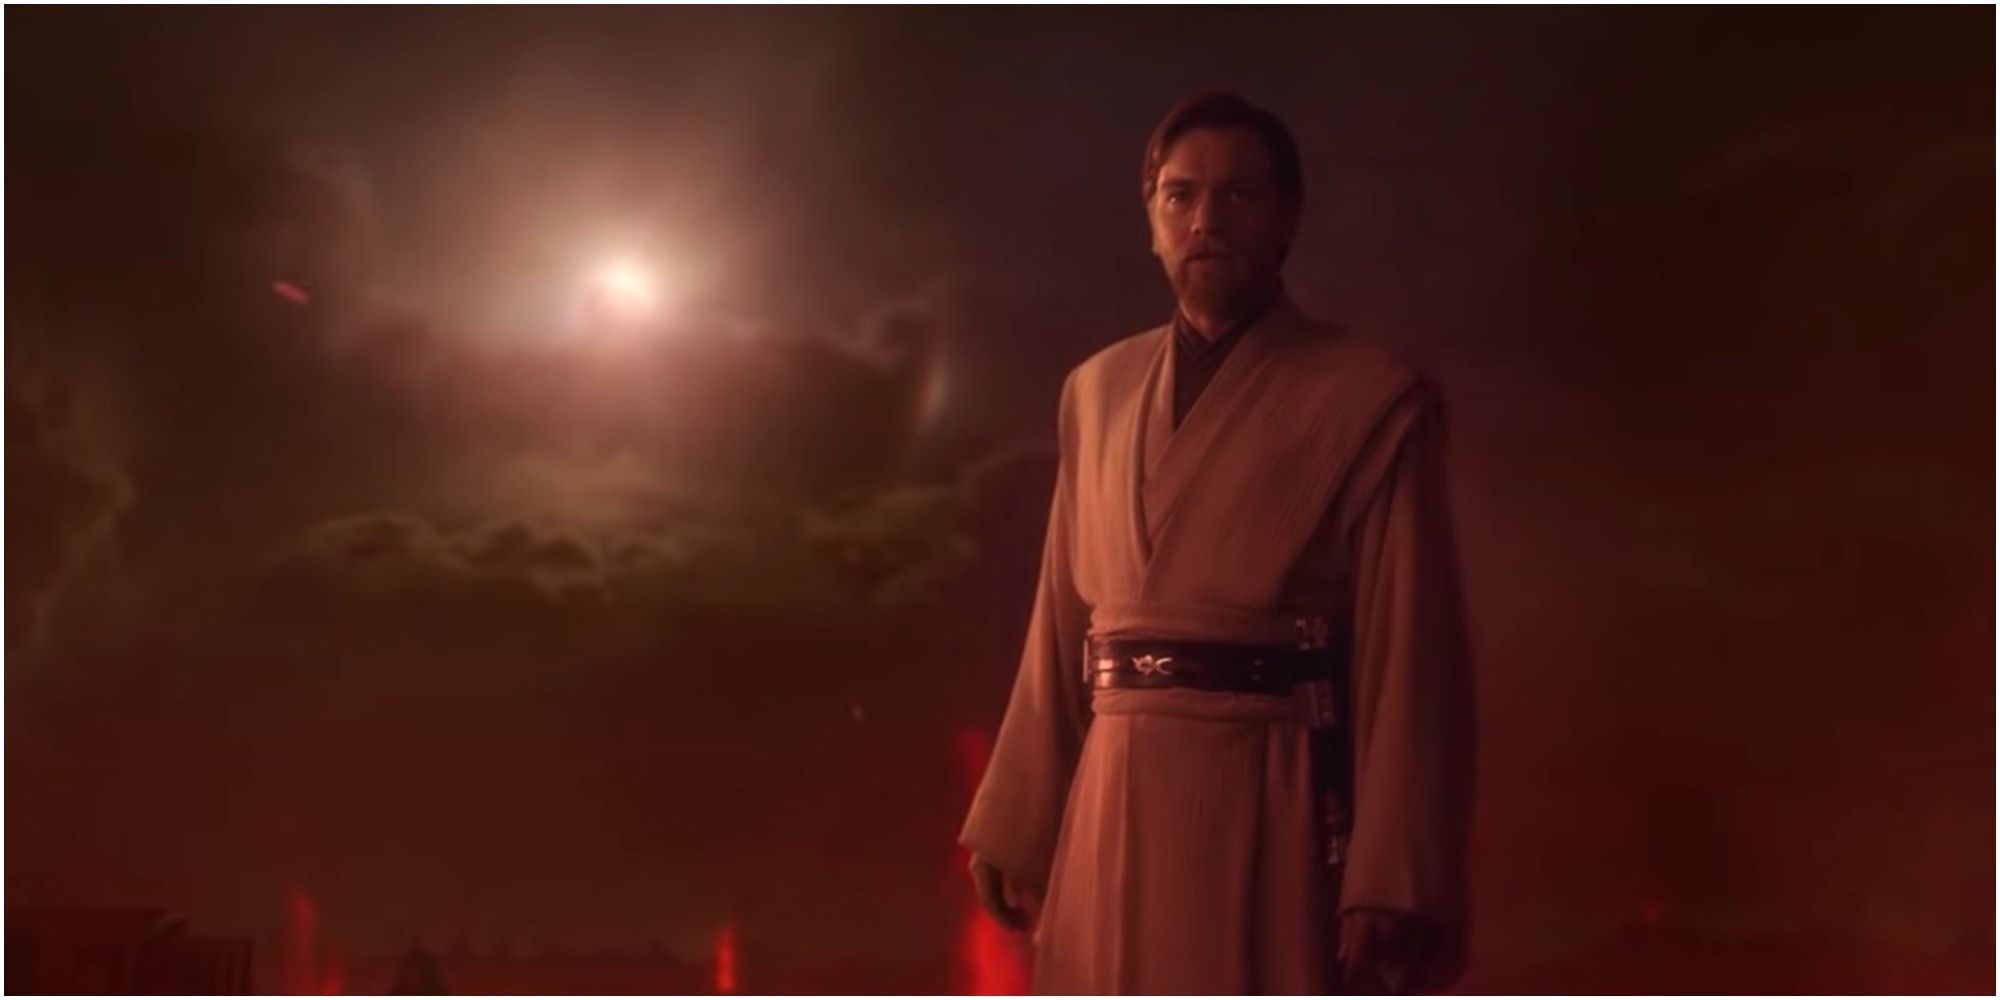 Obi-Wan prepares to face off against Anakin Skywalker